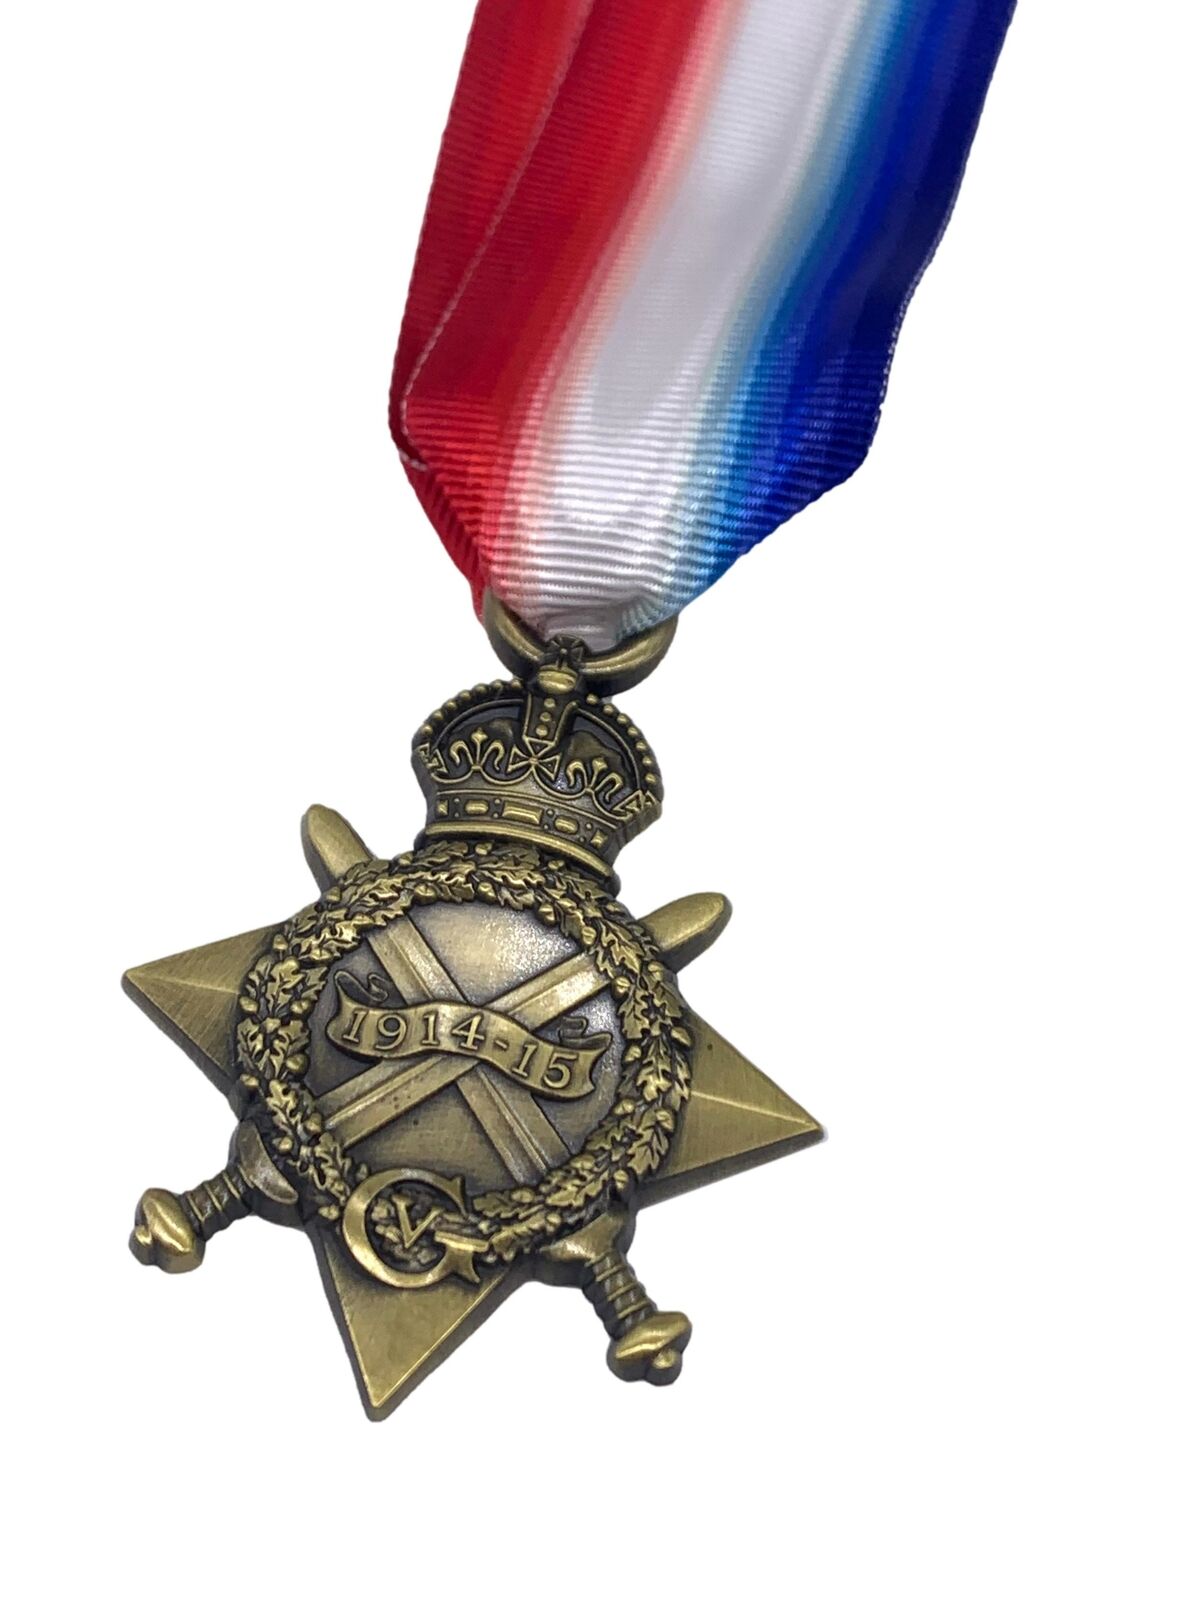 Replica WW1 1914/15 Star Medal, World War 1, Brand New Copy/Reproduction